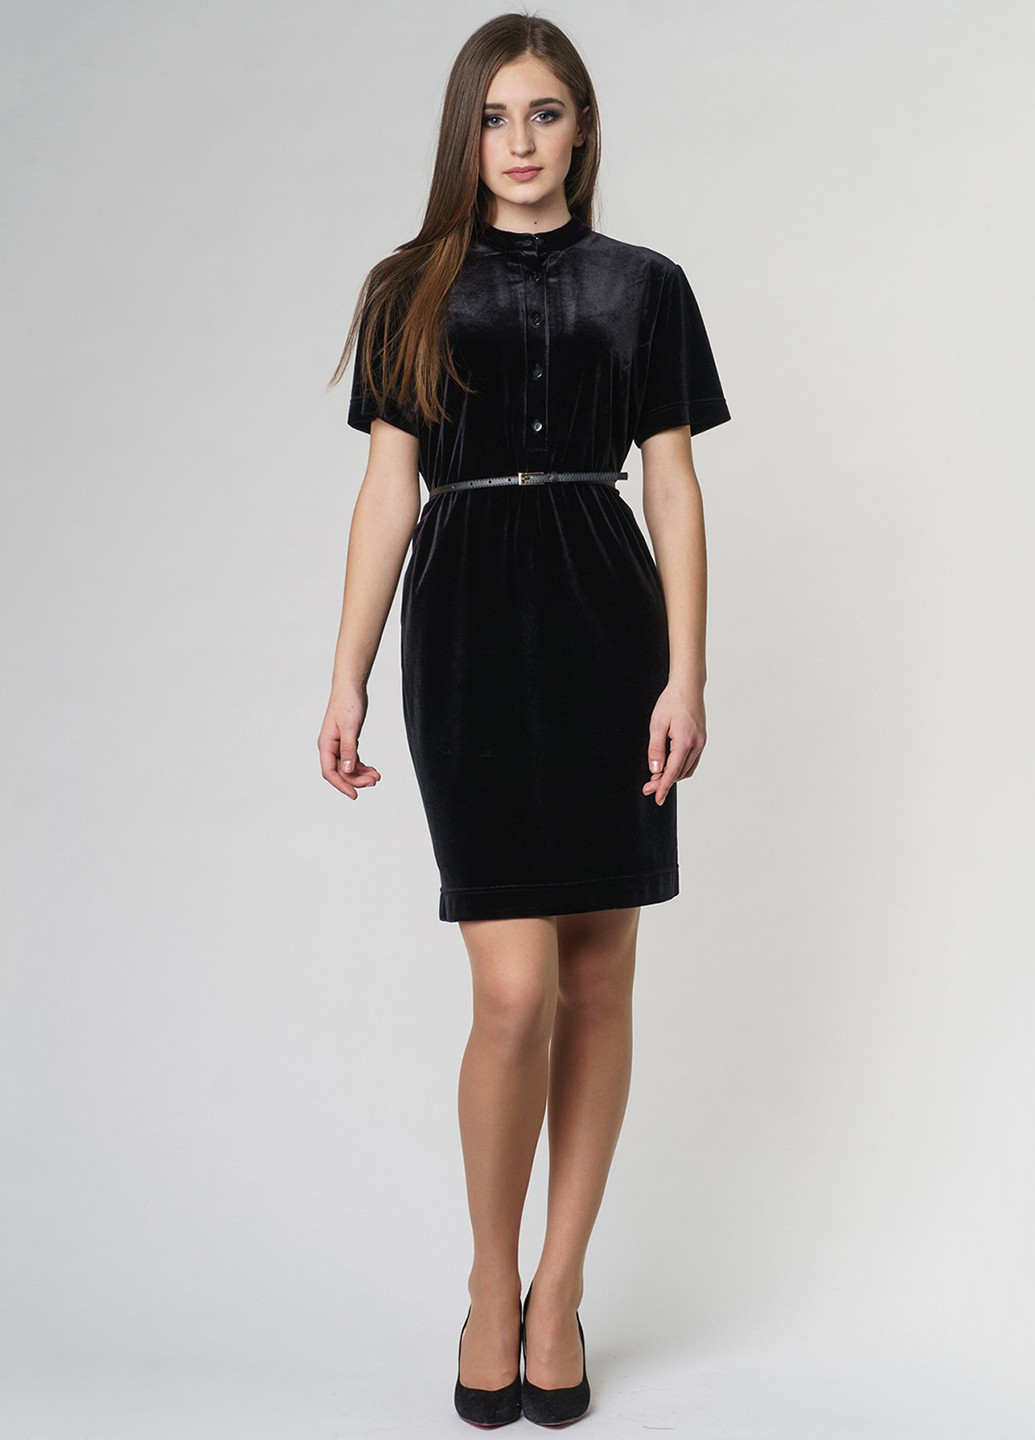 Черное деловое платье футляр OKS by Oksana Demchenko однотонное